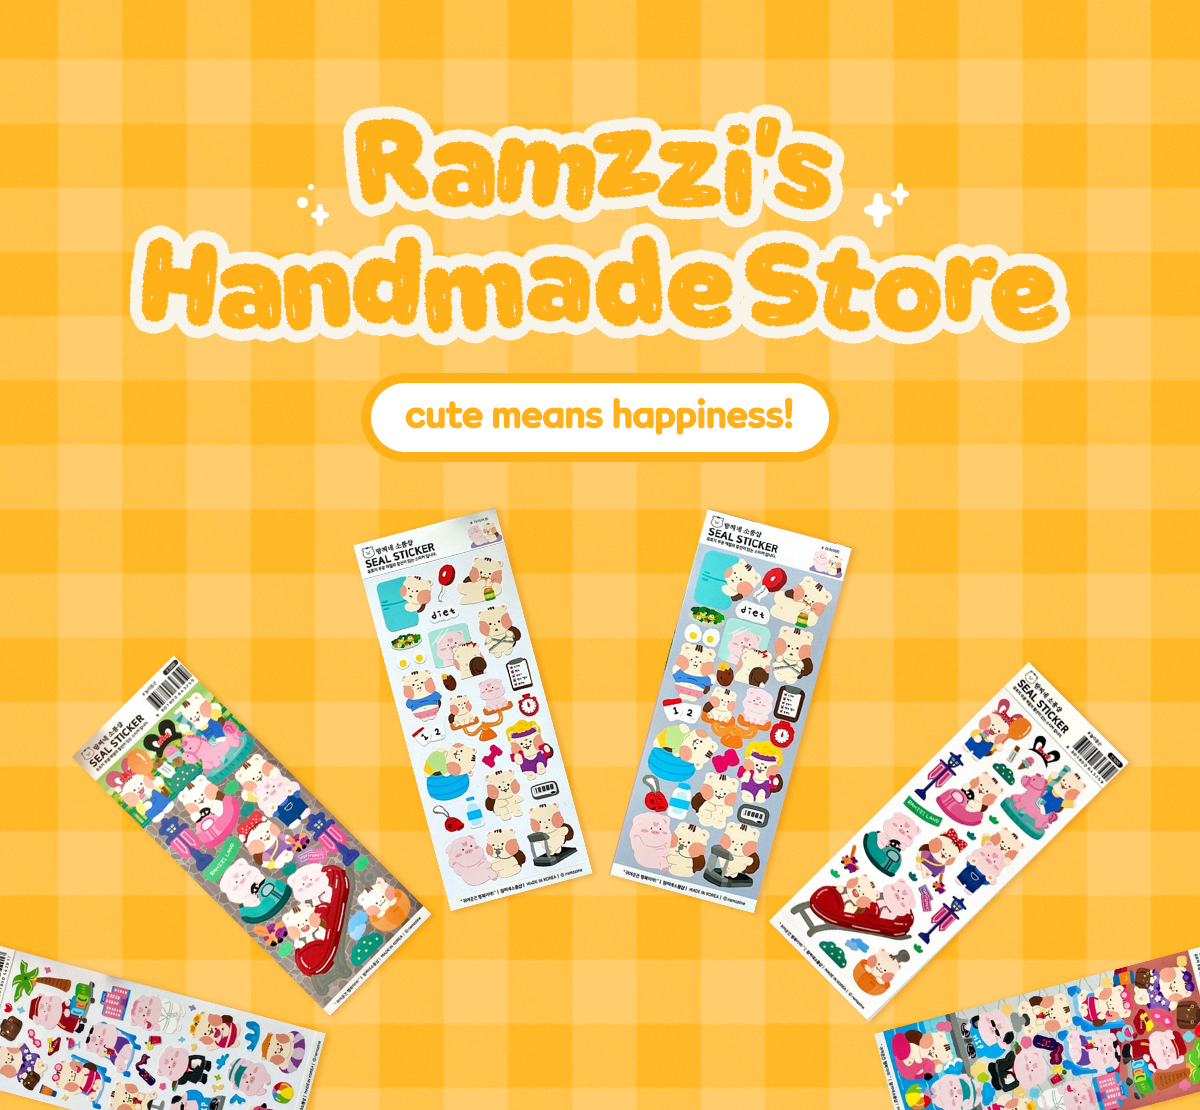 Ramzzi's store